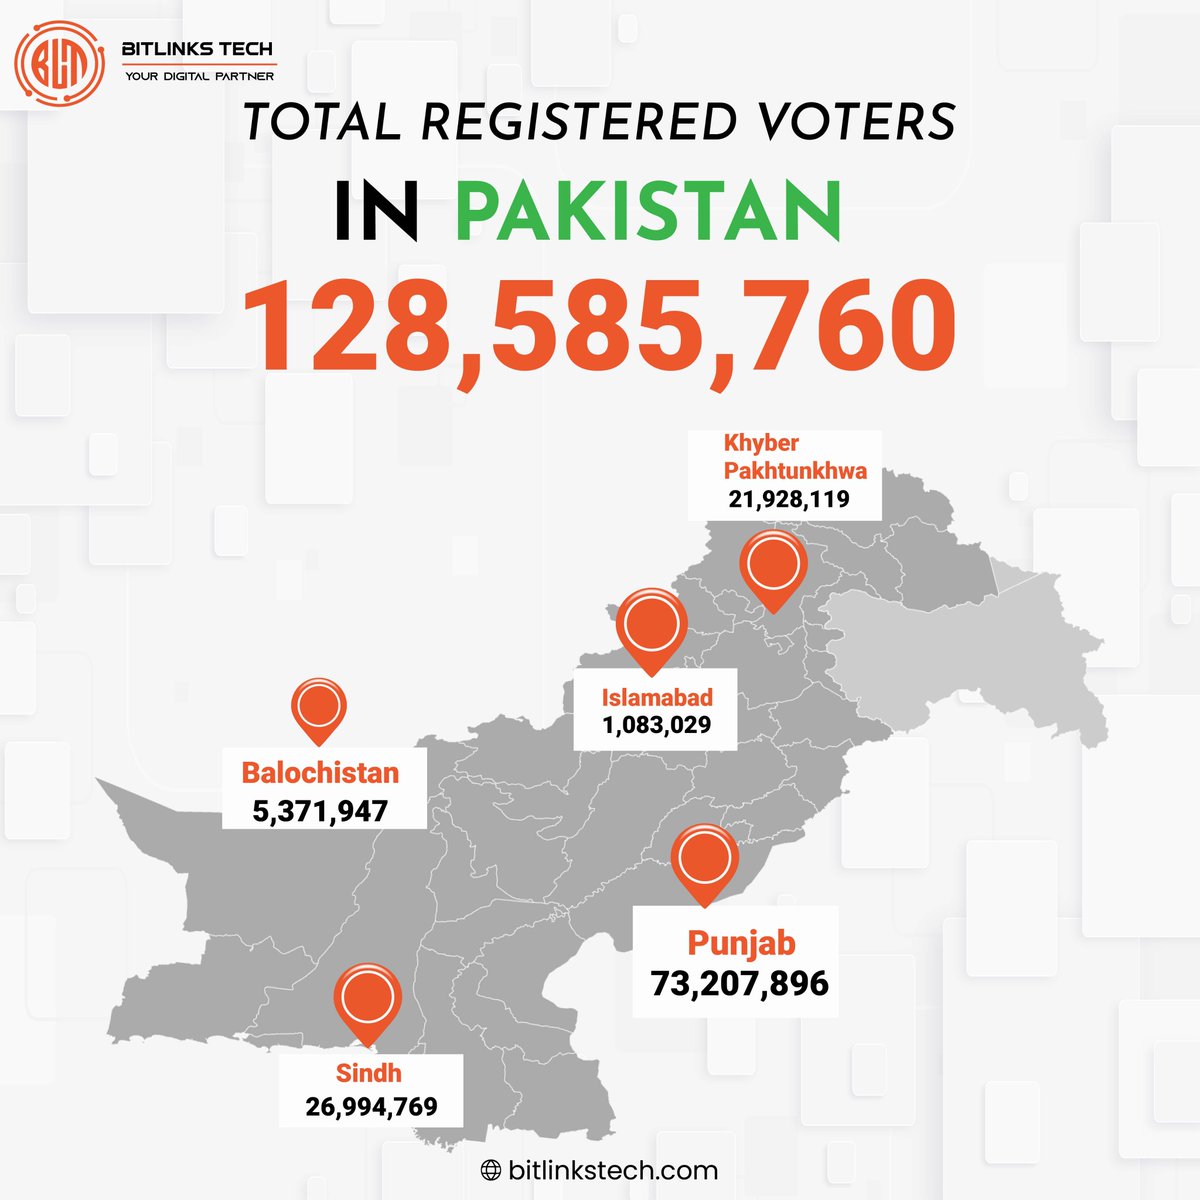 Pakistan Registered Voters Count👇
.
.
#bitlinkstech #election2024 #voting2024 #vote #votingsystem #pakistan #PowerOfTheBallot #DemocraticSpirit #OneNation #CollectiveFuture #VoteForChange #Punjab #KPK #Islamabad #Sindh #Balochistan #EveryVoiceCounts #ExerciseYourRight